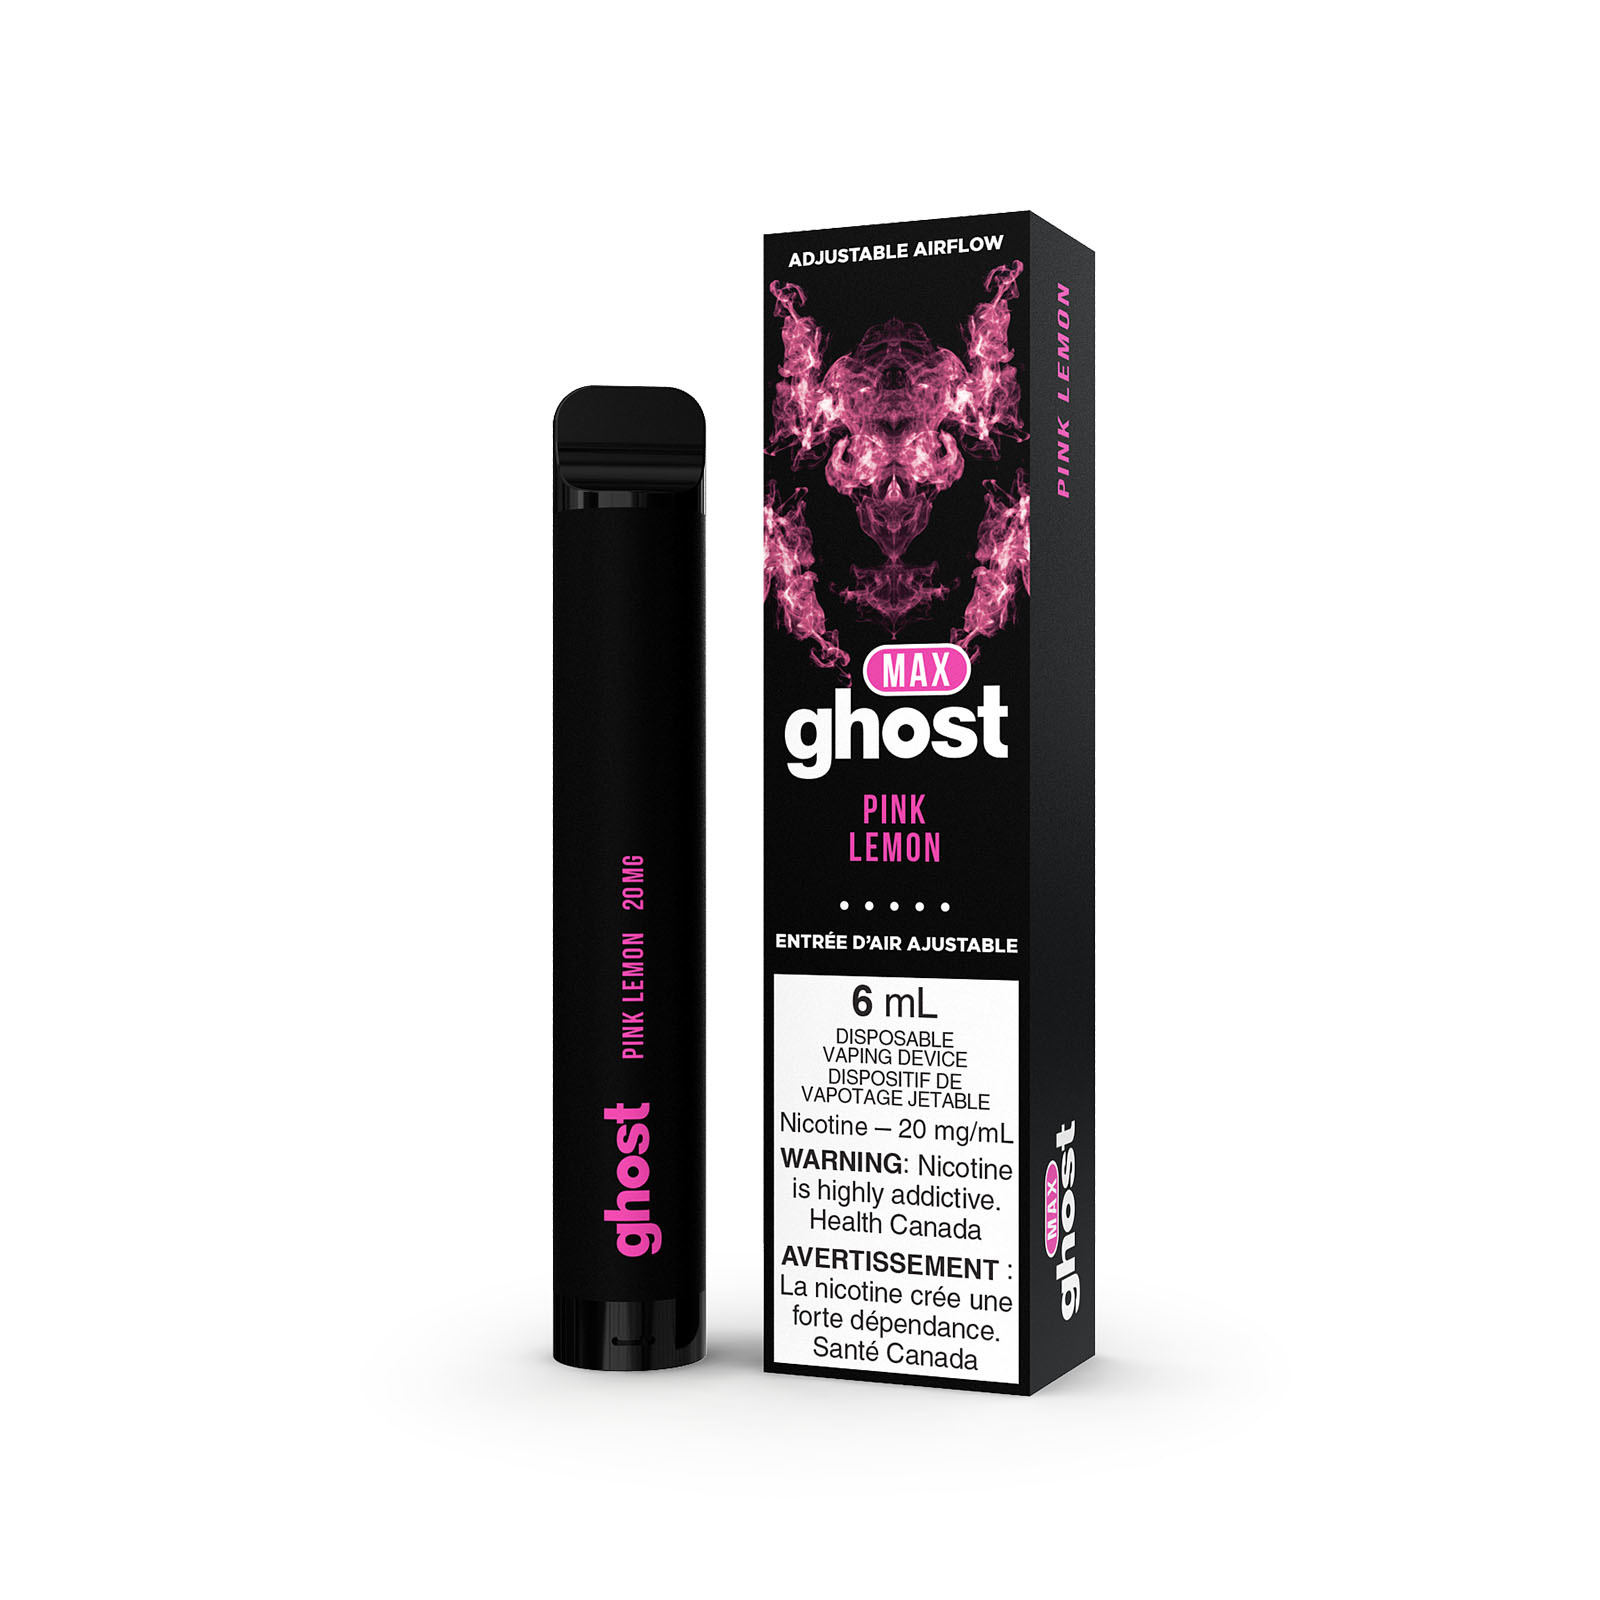 Ghost Ghost Max Pink Lemon Disposable Vape